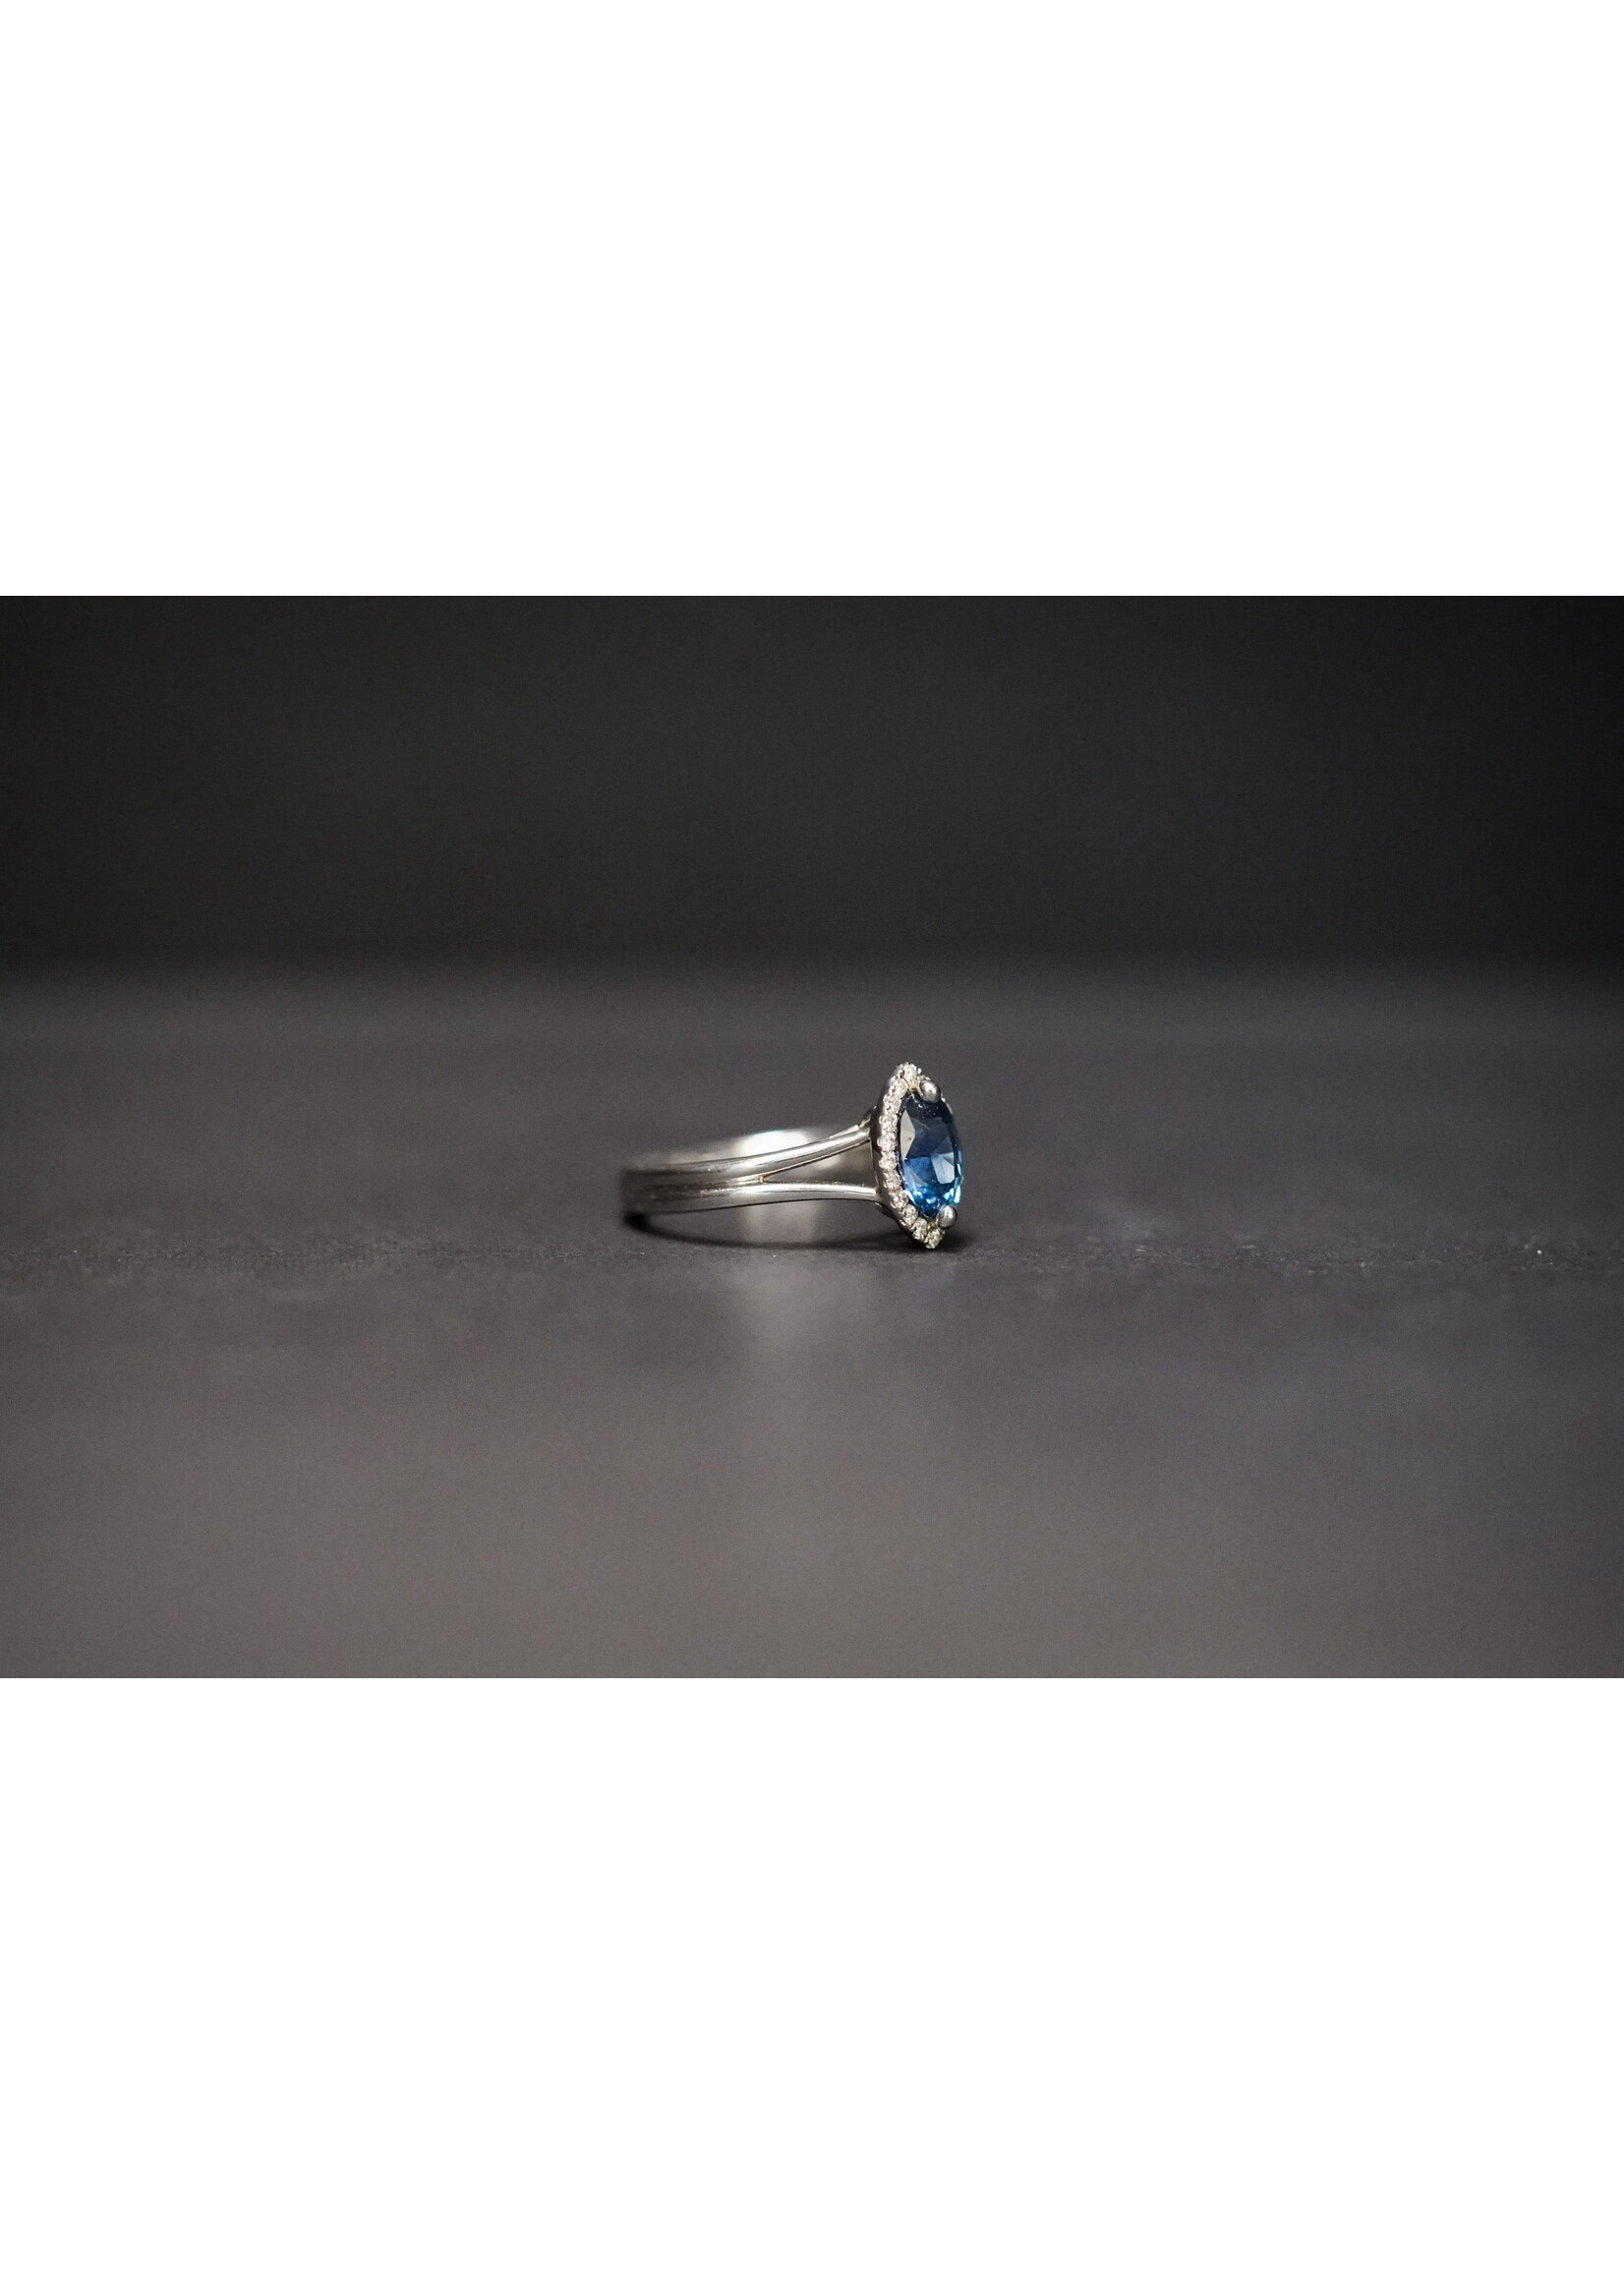 14KW 3.6g 1.80ctw (1.57ctr) Sapphire & Diamond Halo Ring (size 6.75)